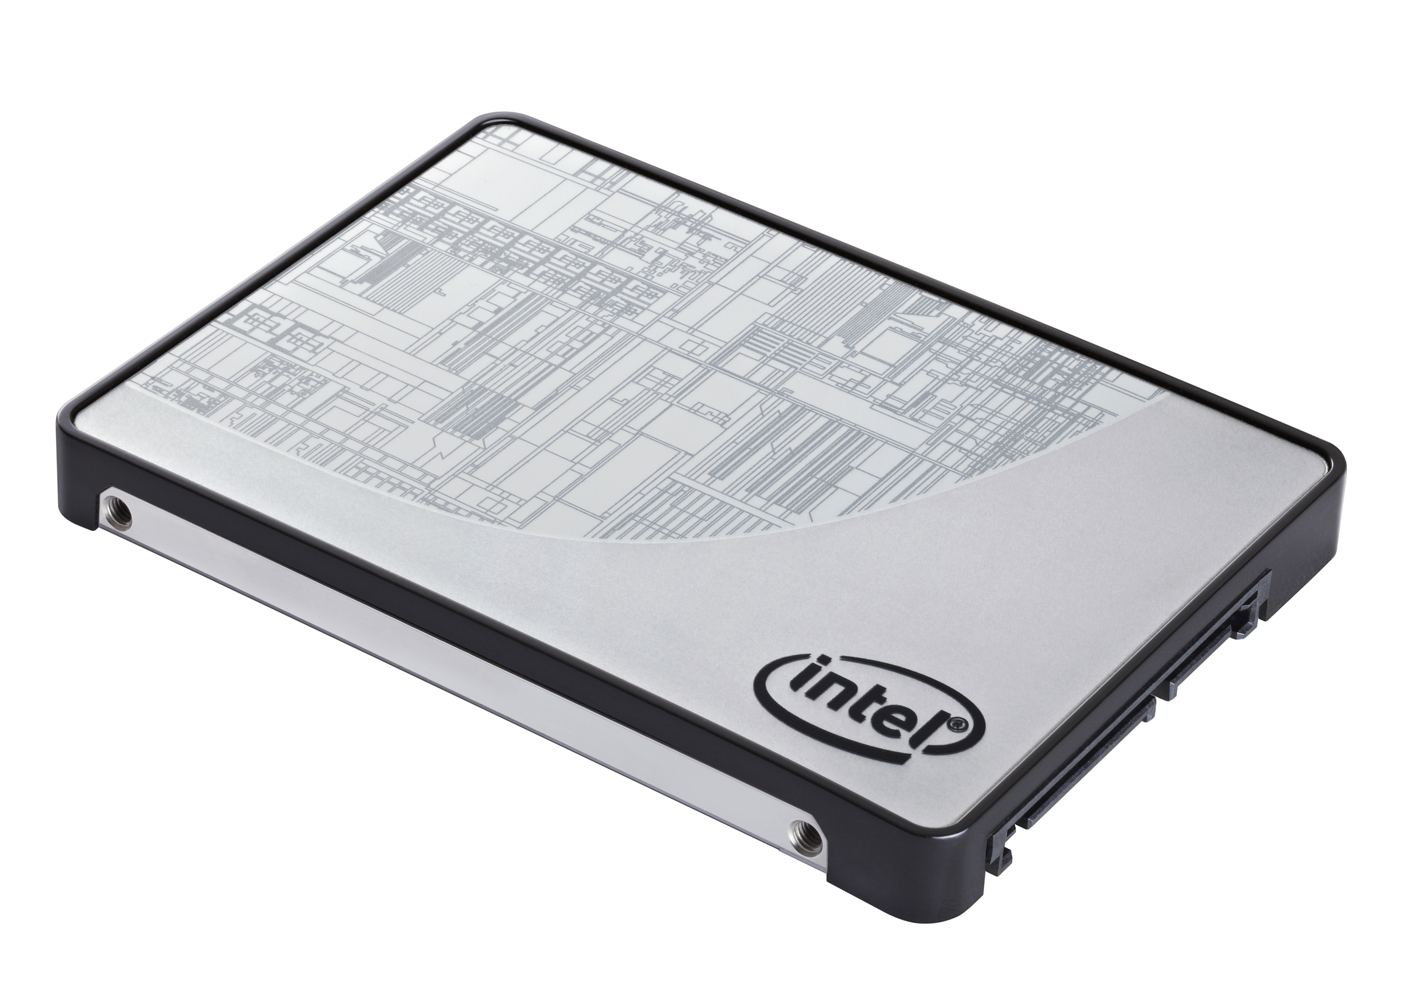 Media asset in full size related to 3dfxzone.it news item entitled as follows: Intel aggiunge una soluzione da 180GB alla linea SSD 335 Series | Image Name: news18876_Intel-SSD-335-Series-180-GB_1.jpg